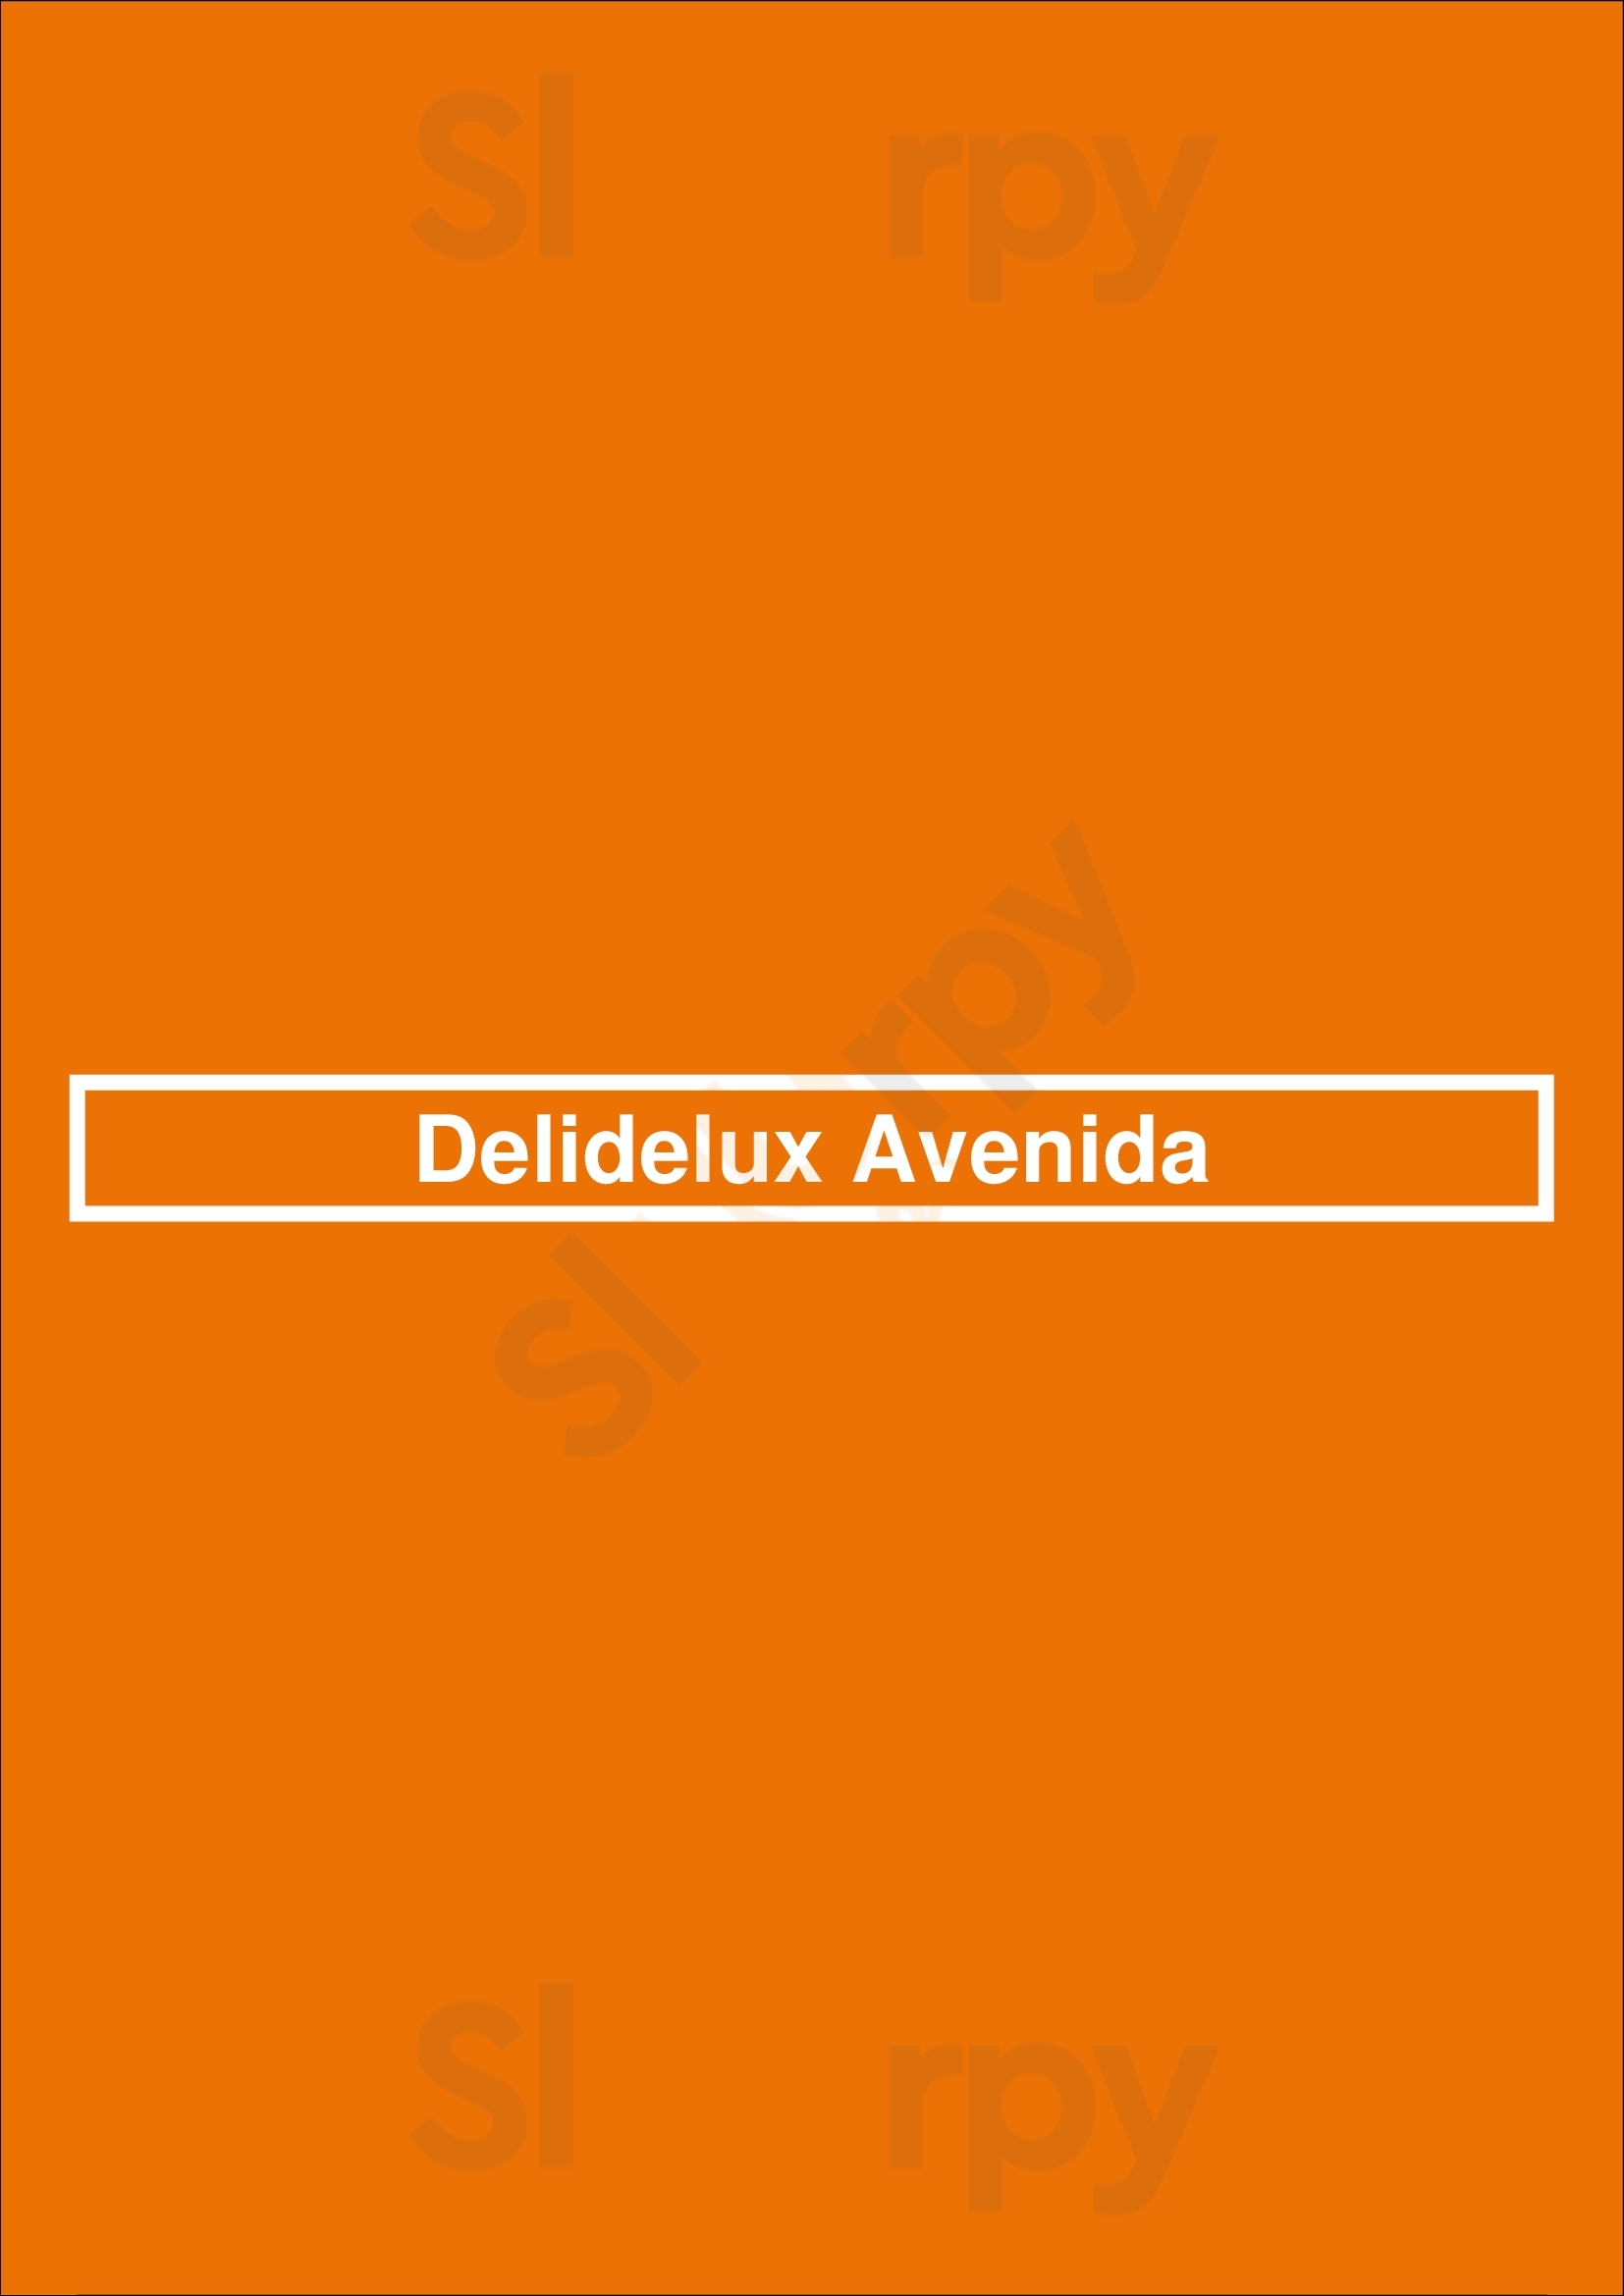 Delidelux Avenida Lisboa Menu - 1